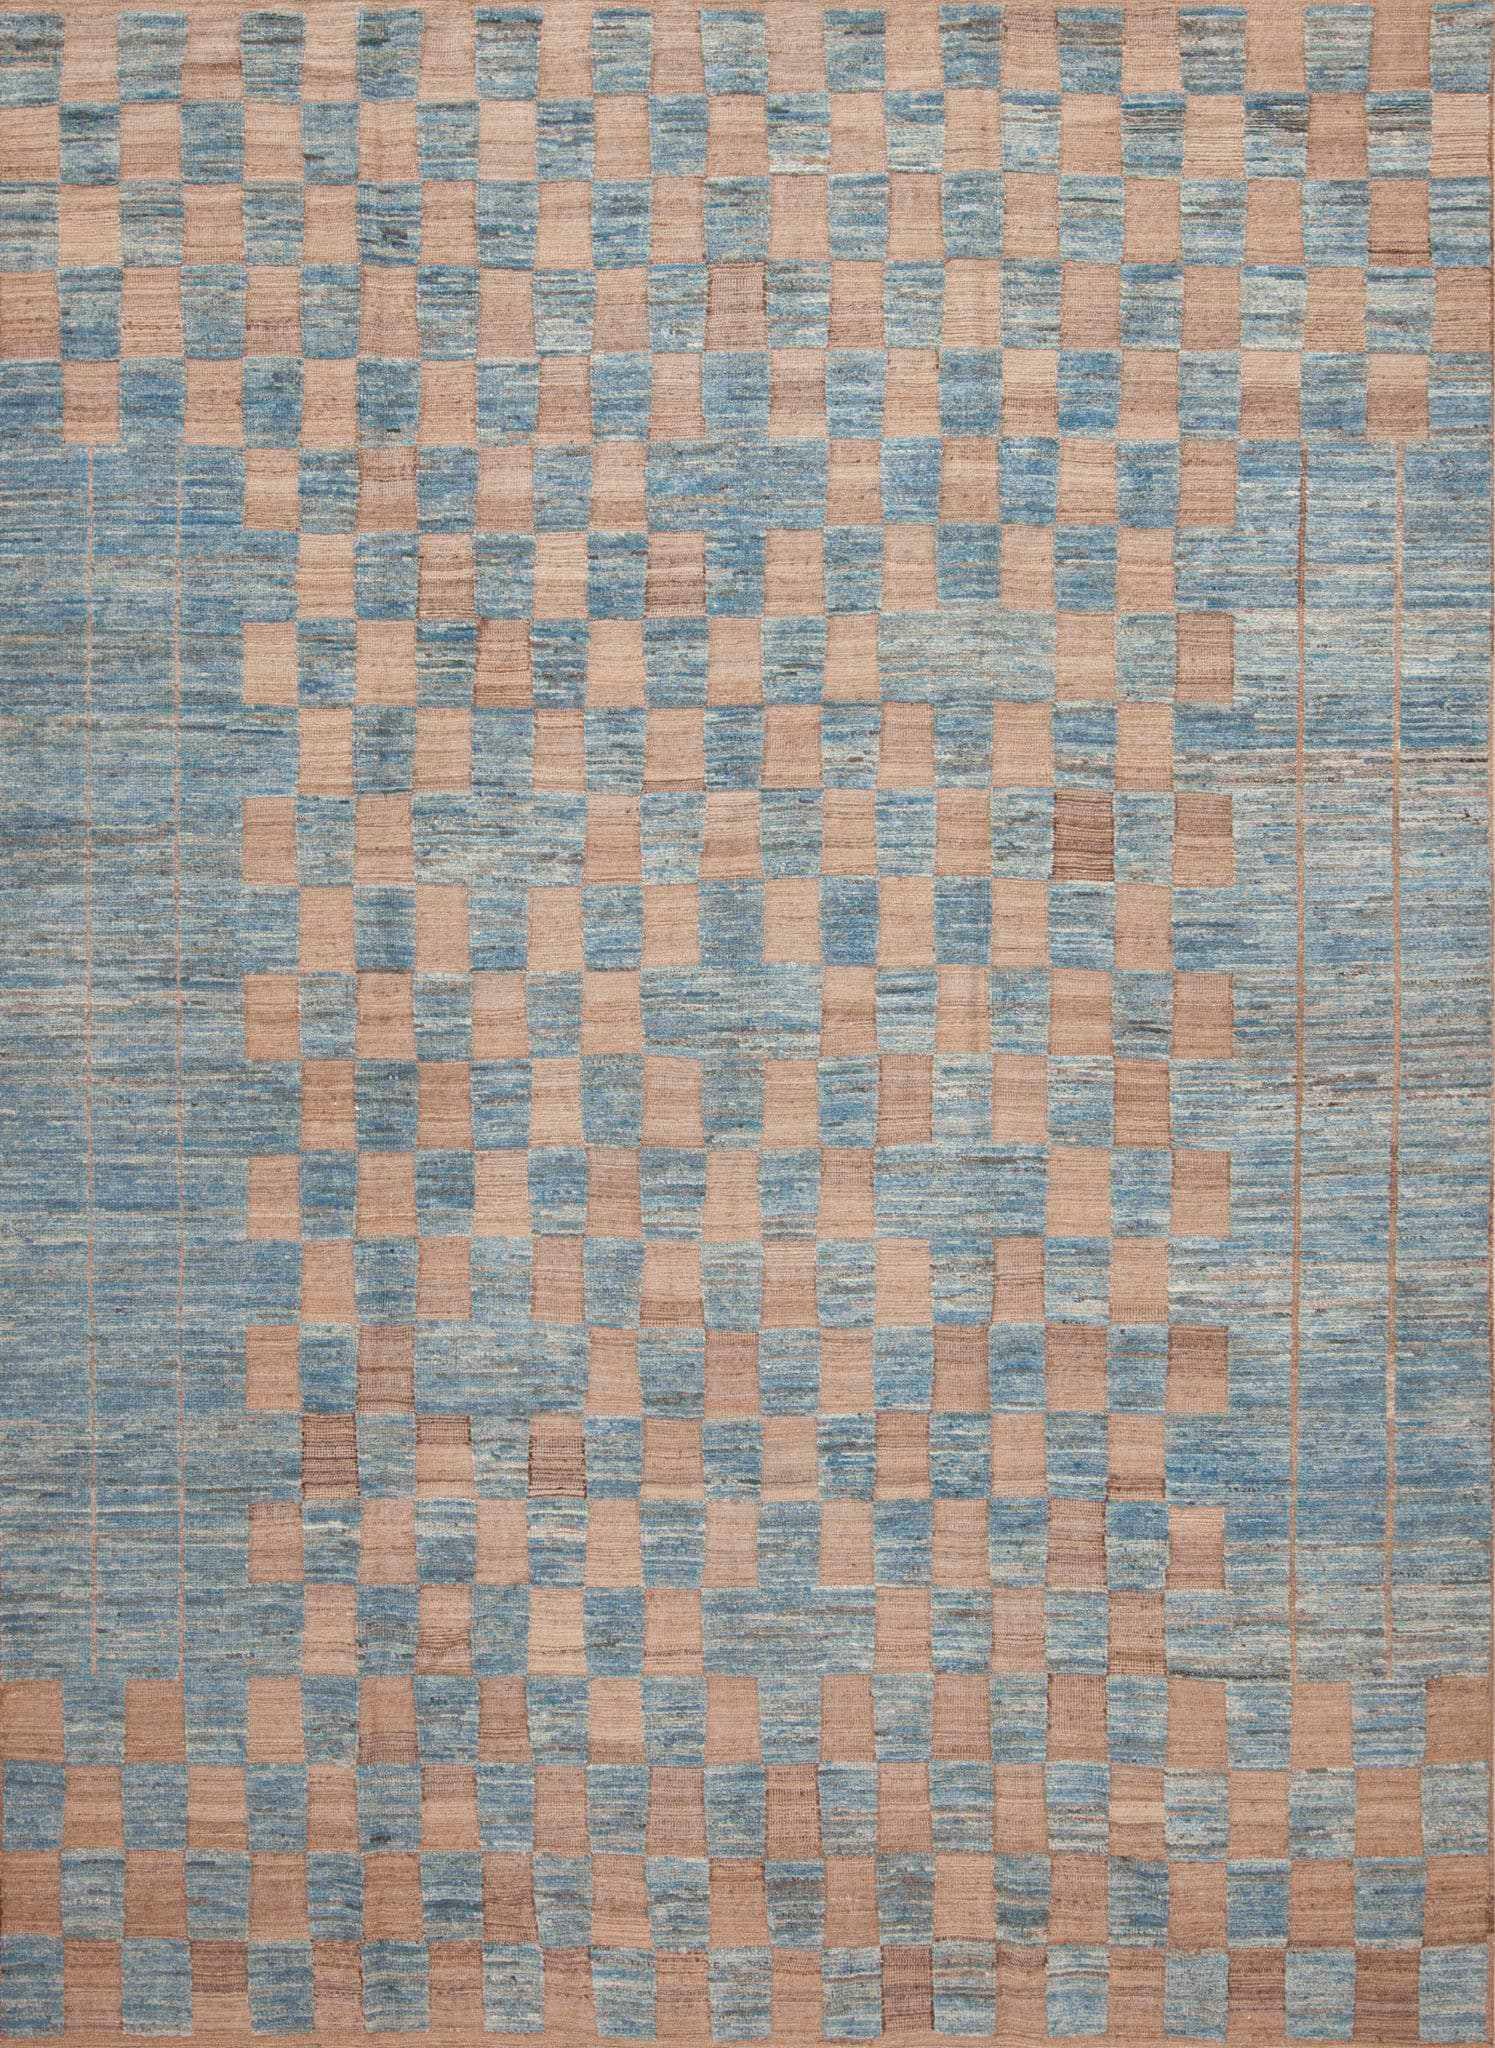 Collection Nazmiyal, tapis tribal géométrique moderne, taille de pièce 8'4" x 11' en vente